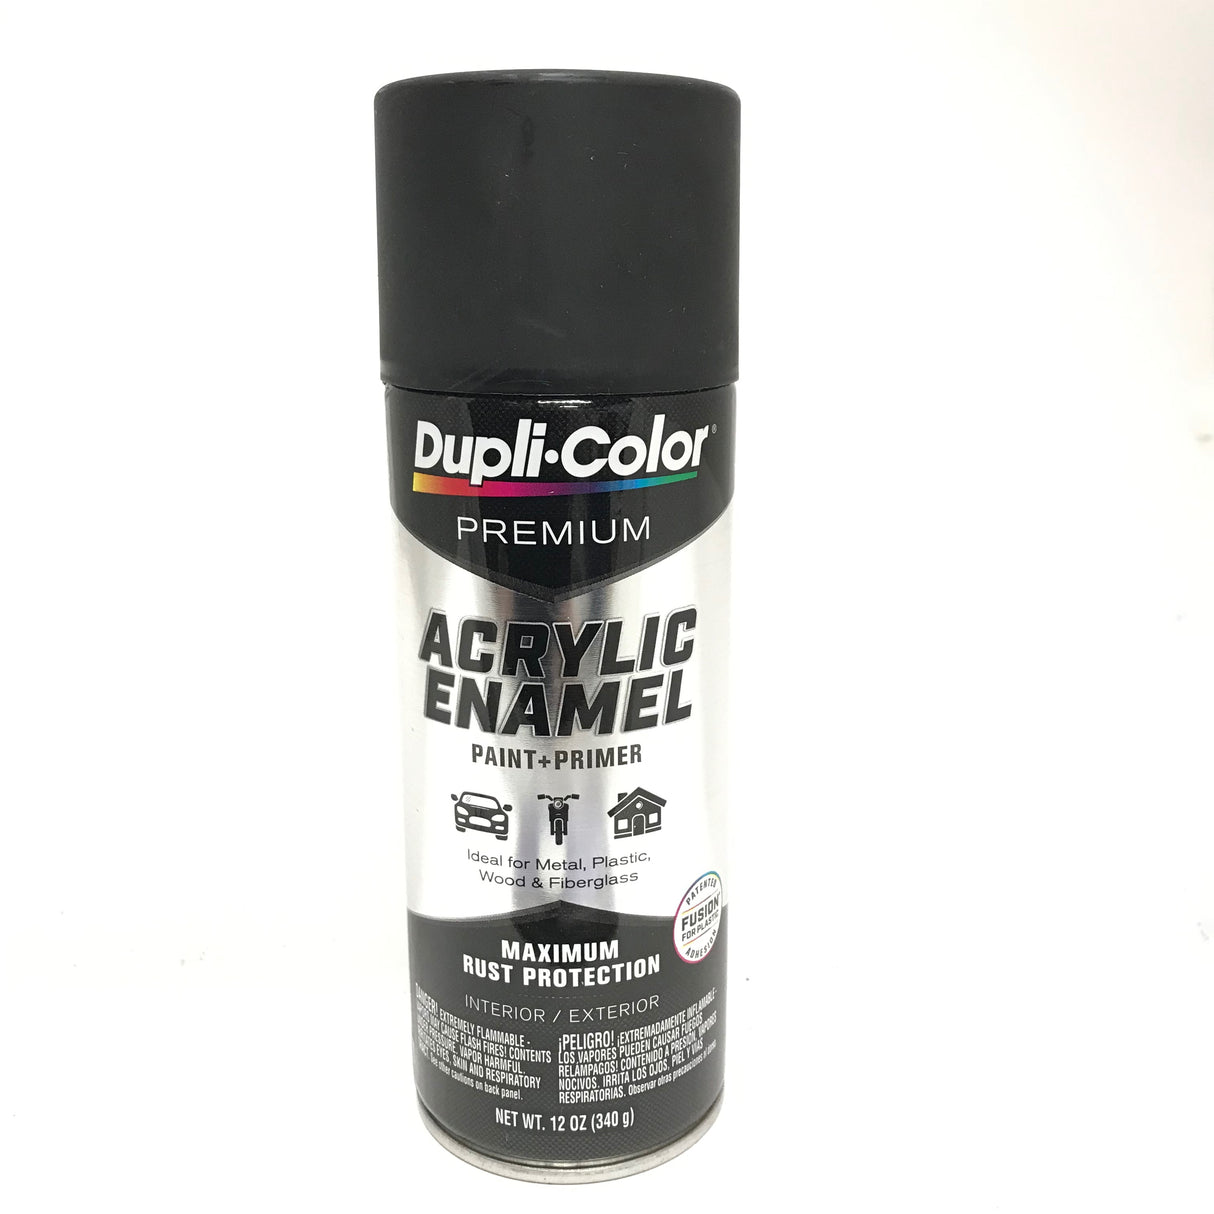 Duplicolor PAE102 Flat Black Premium Acrylic Enamel - Max Rust Protection - 12 oz